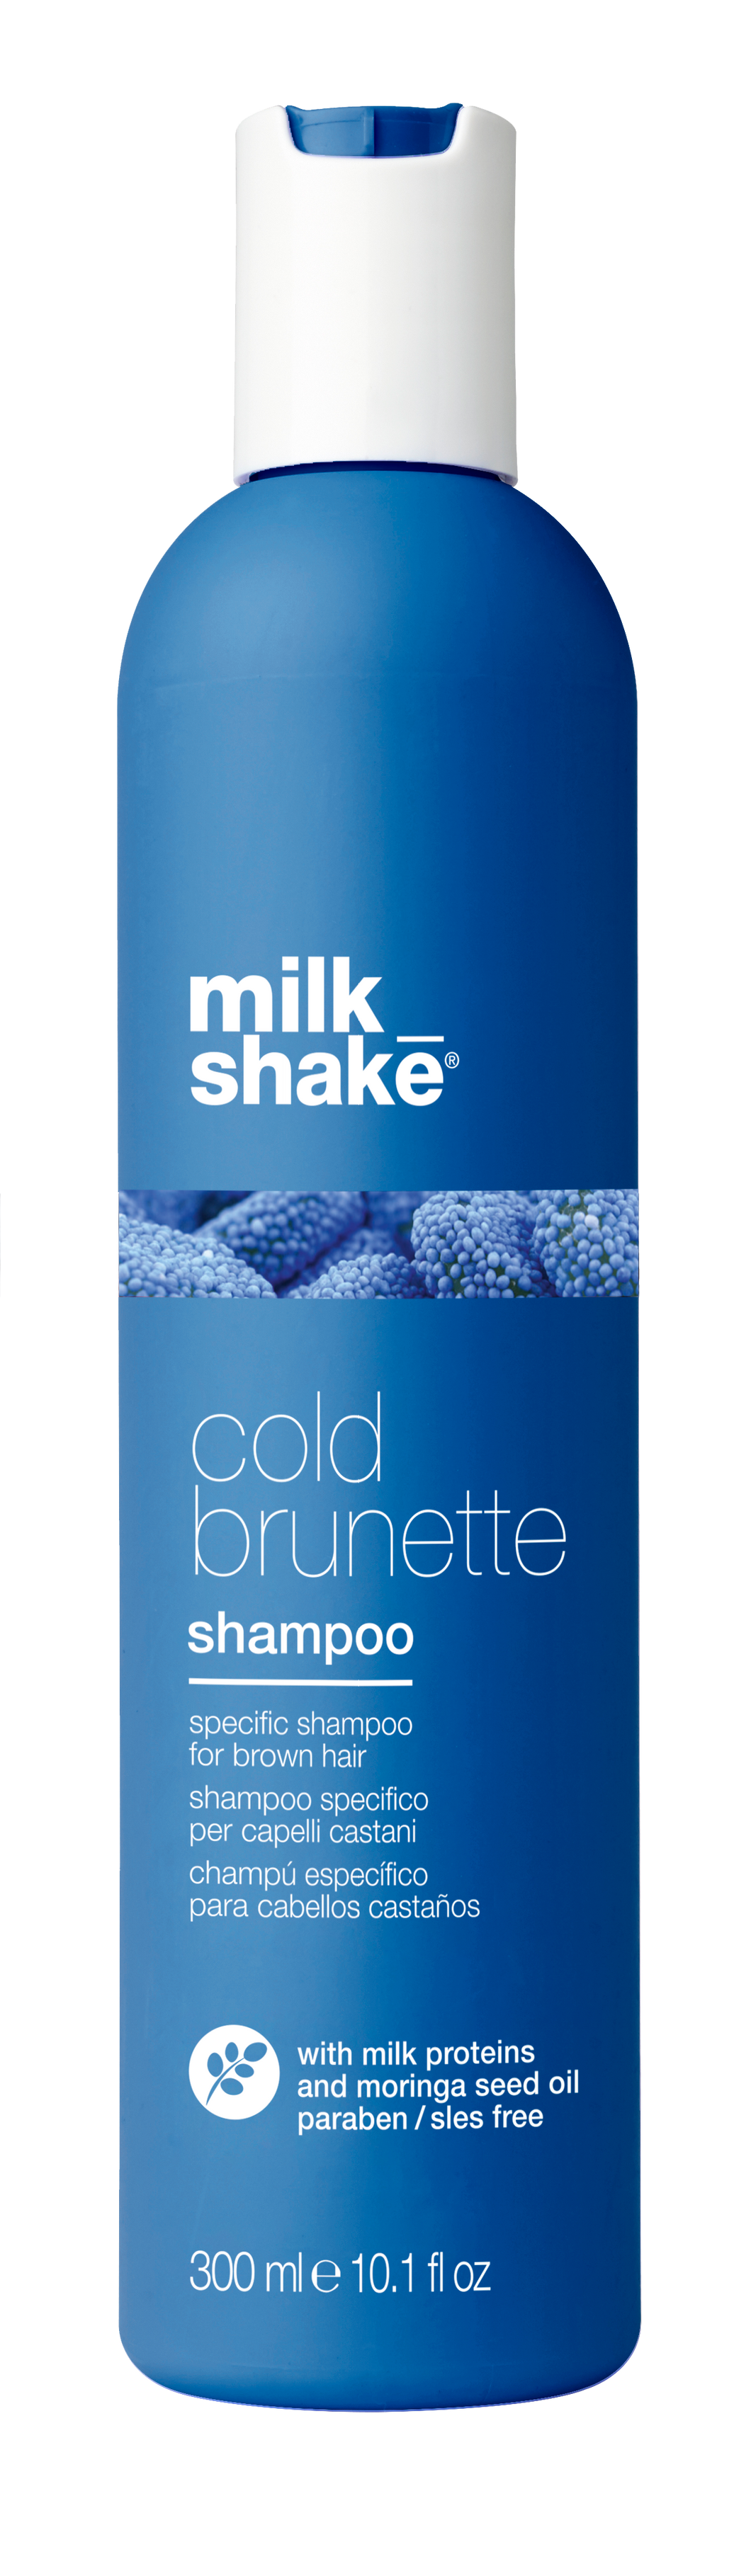 milk_shake cold brunette shampoo